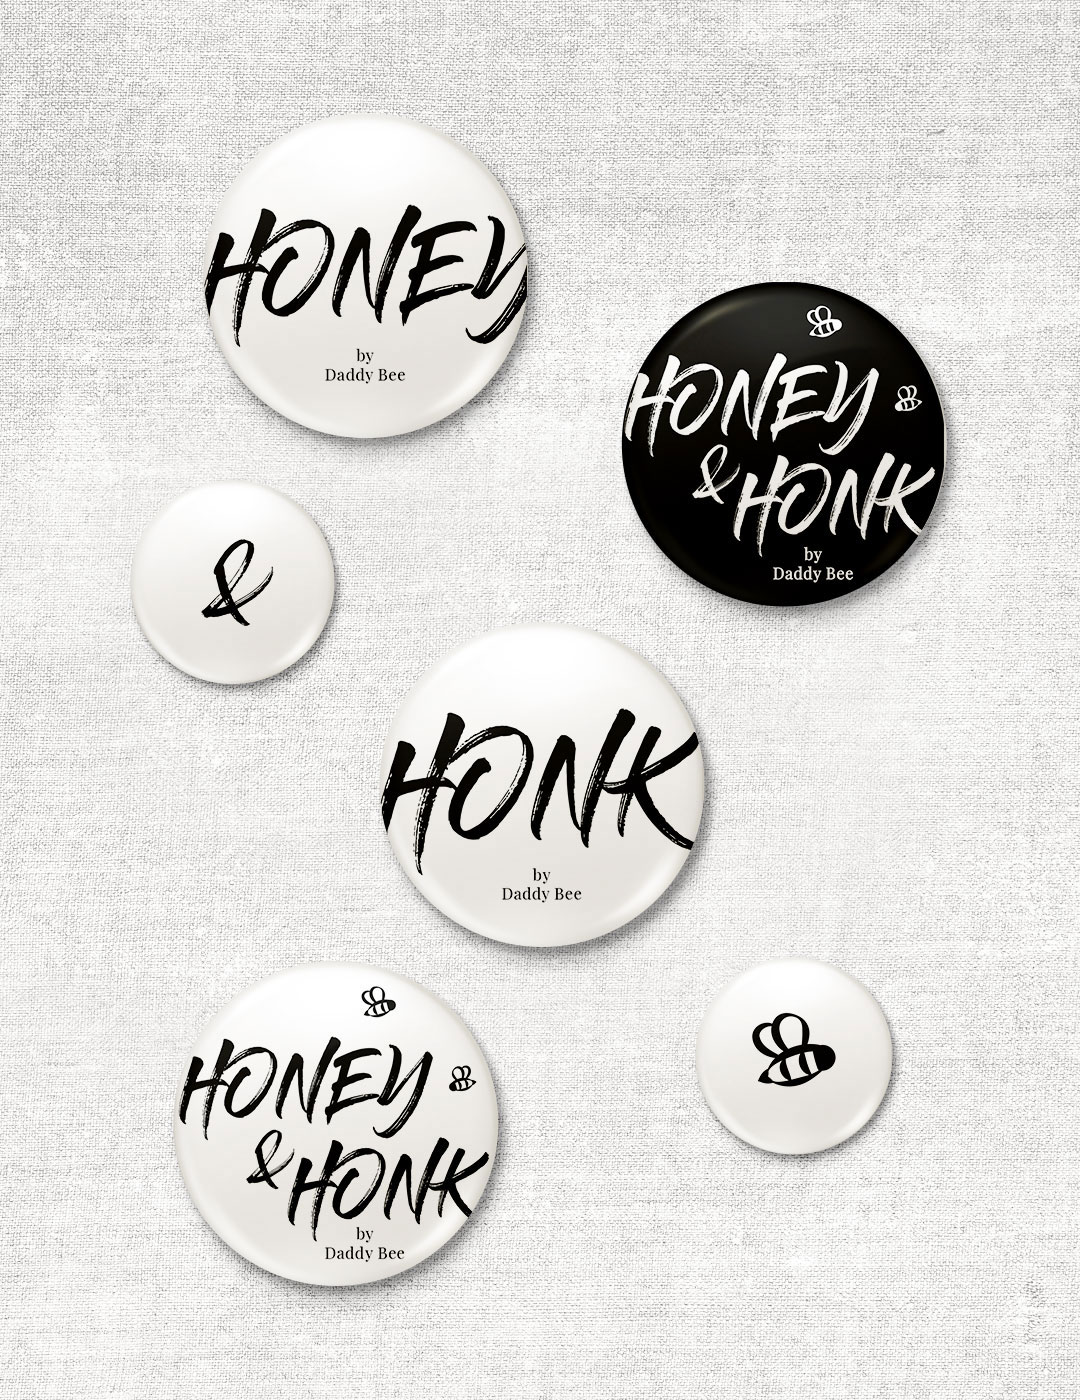 toc designstudio - Honey & Honk - Corporate Design, Packaging